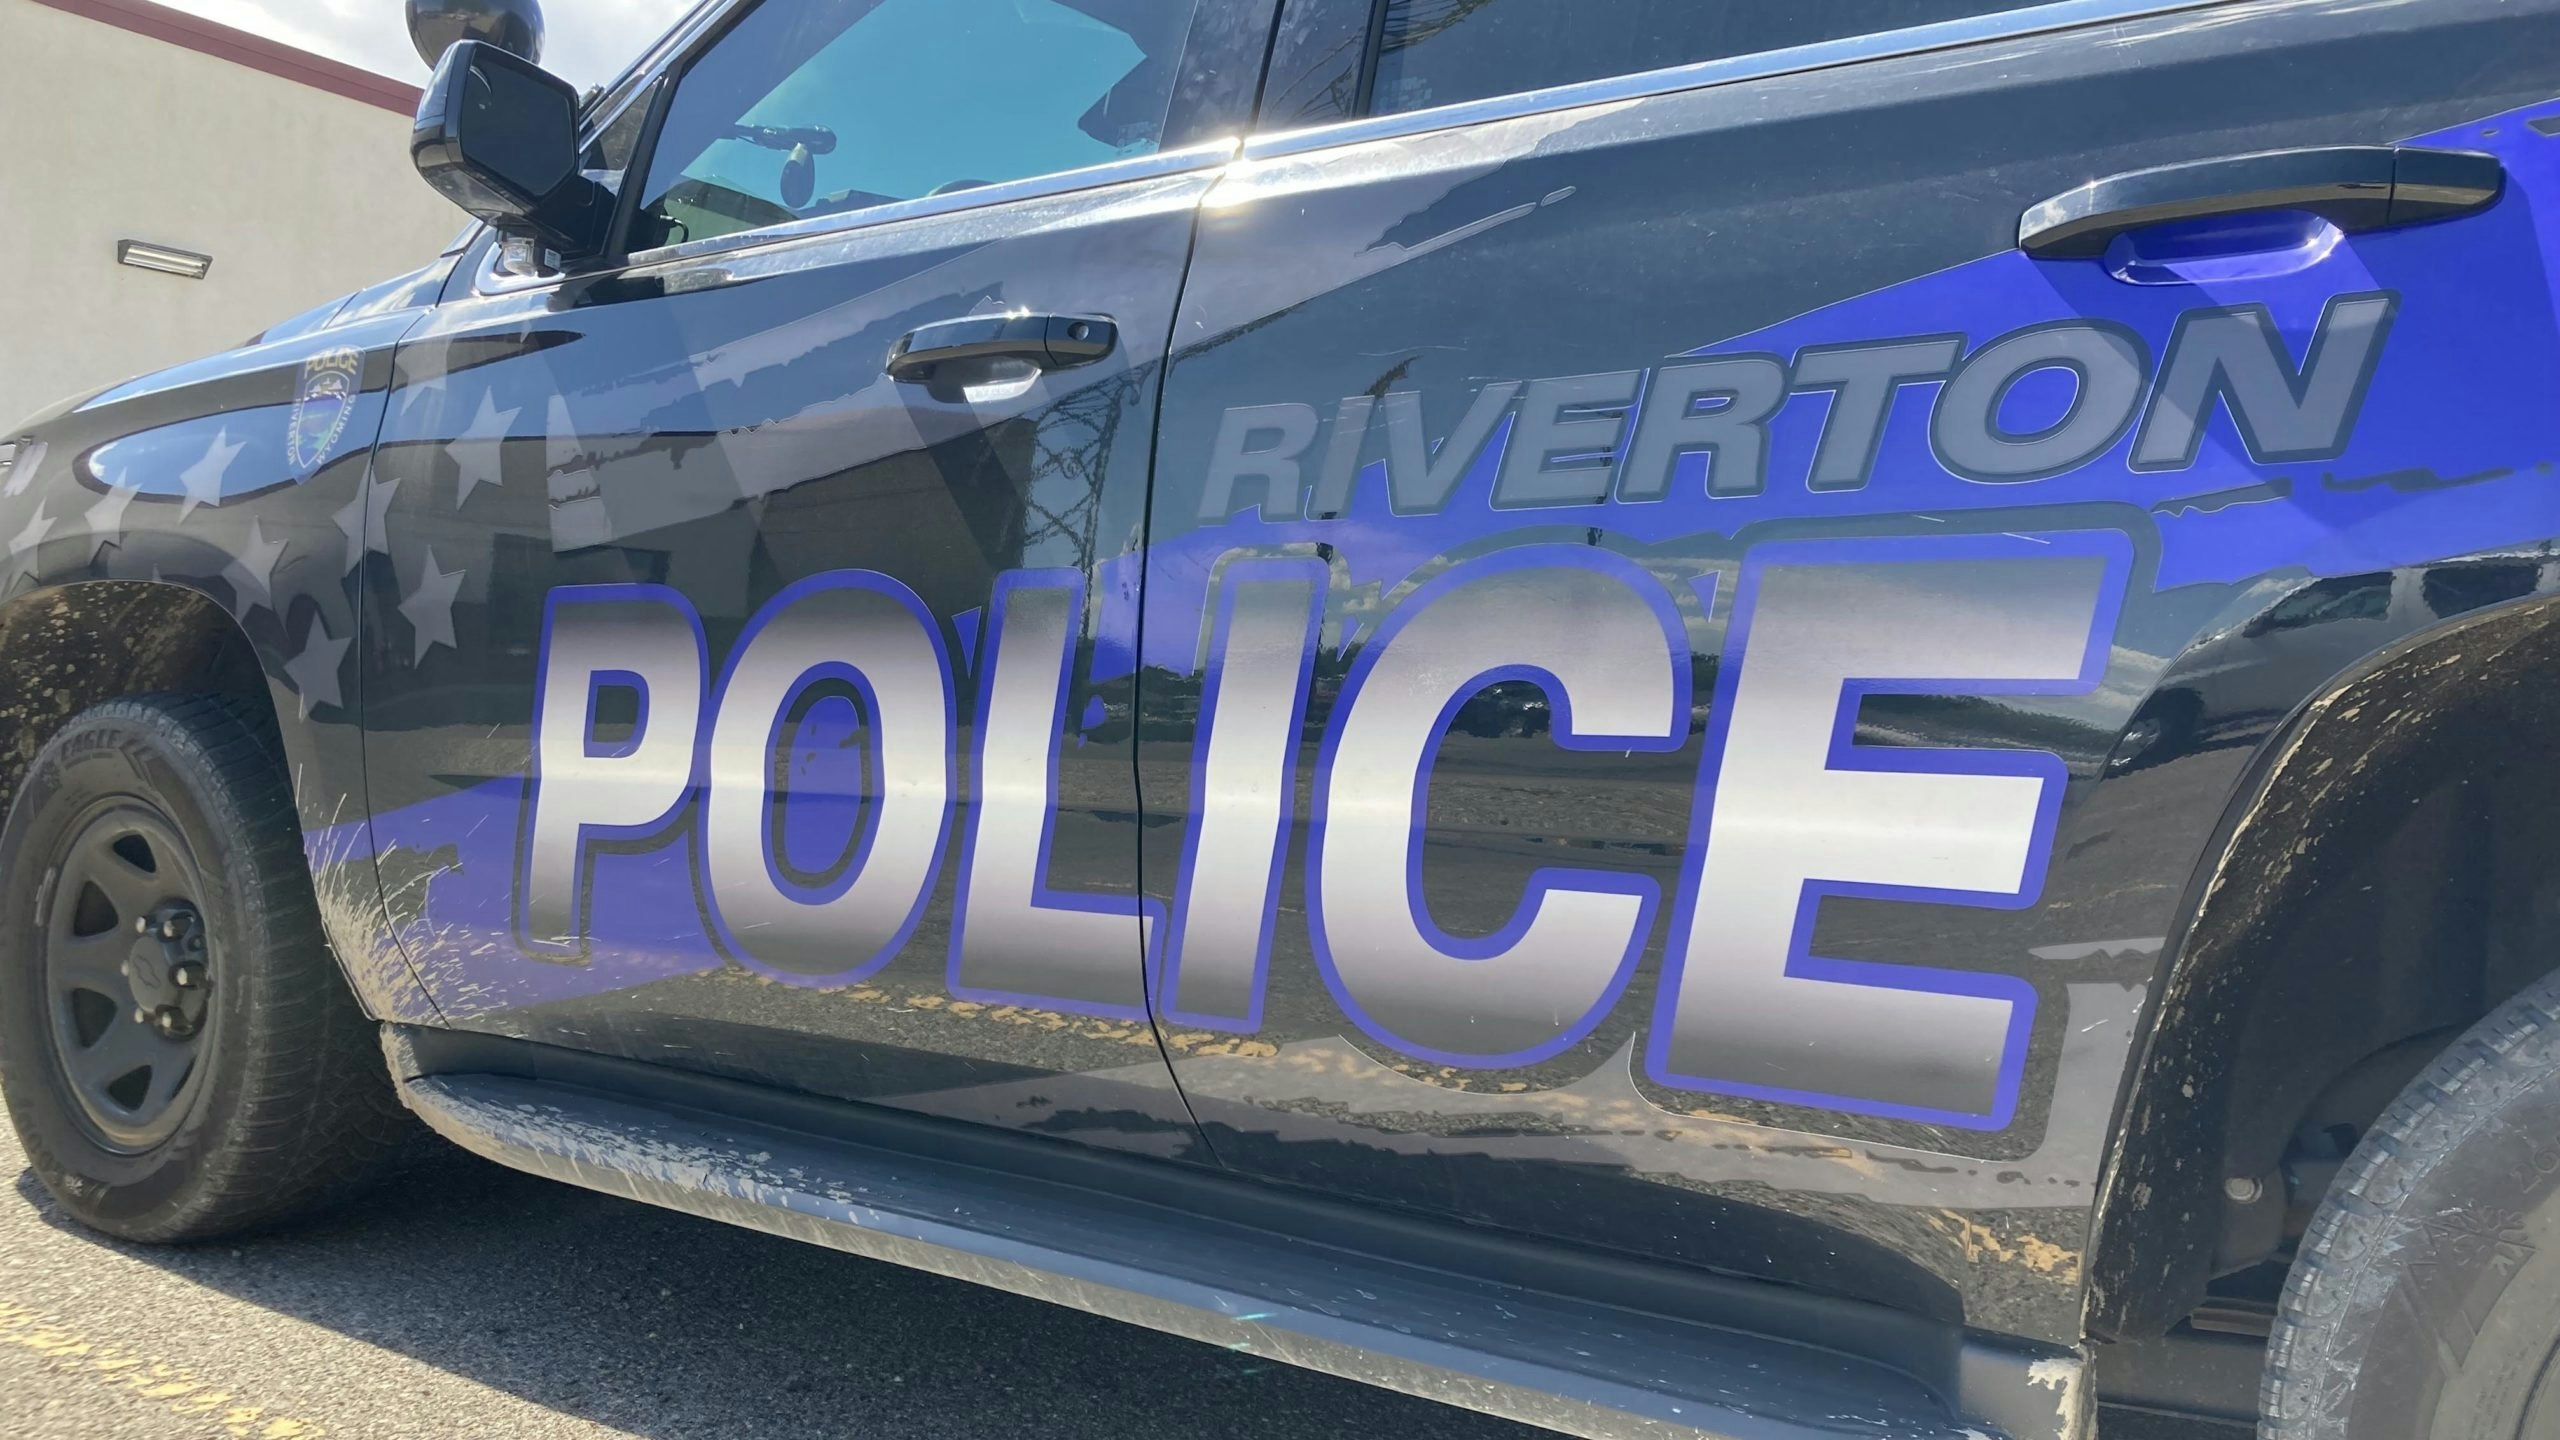 Riverton police 9 1 22 scaled